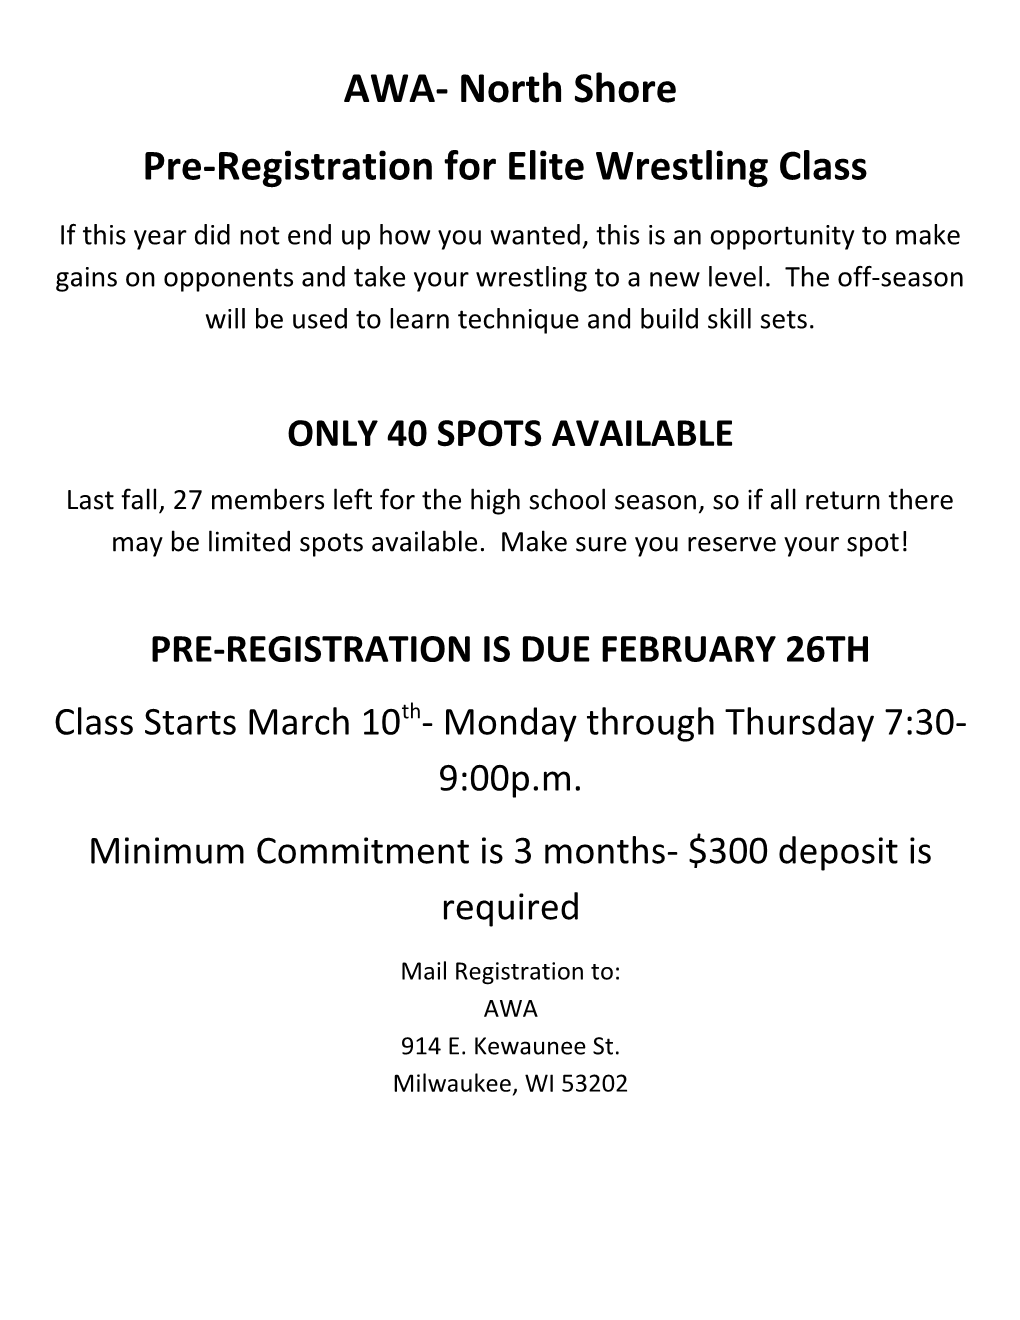 Pre-Registration for Elite Wrestling Class